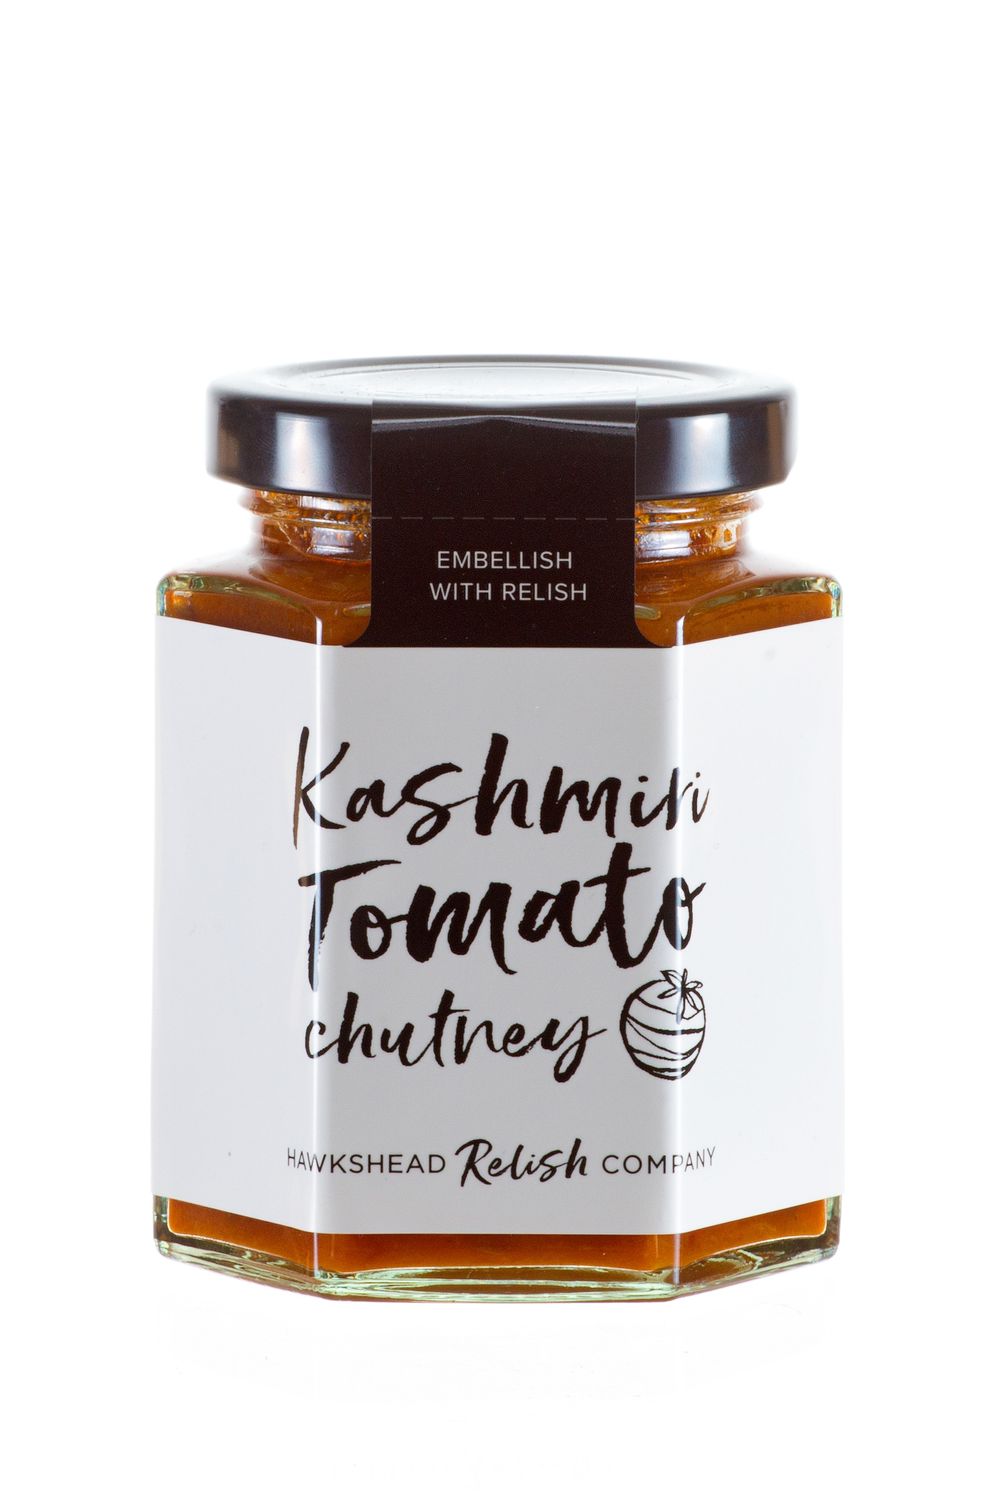 Kashmiri Tomato Chutney